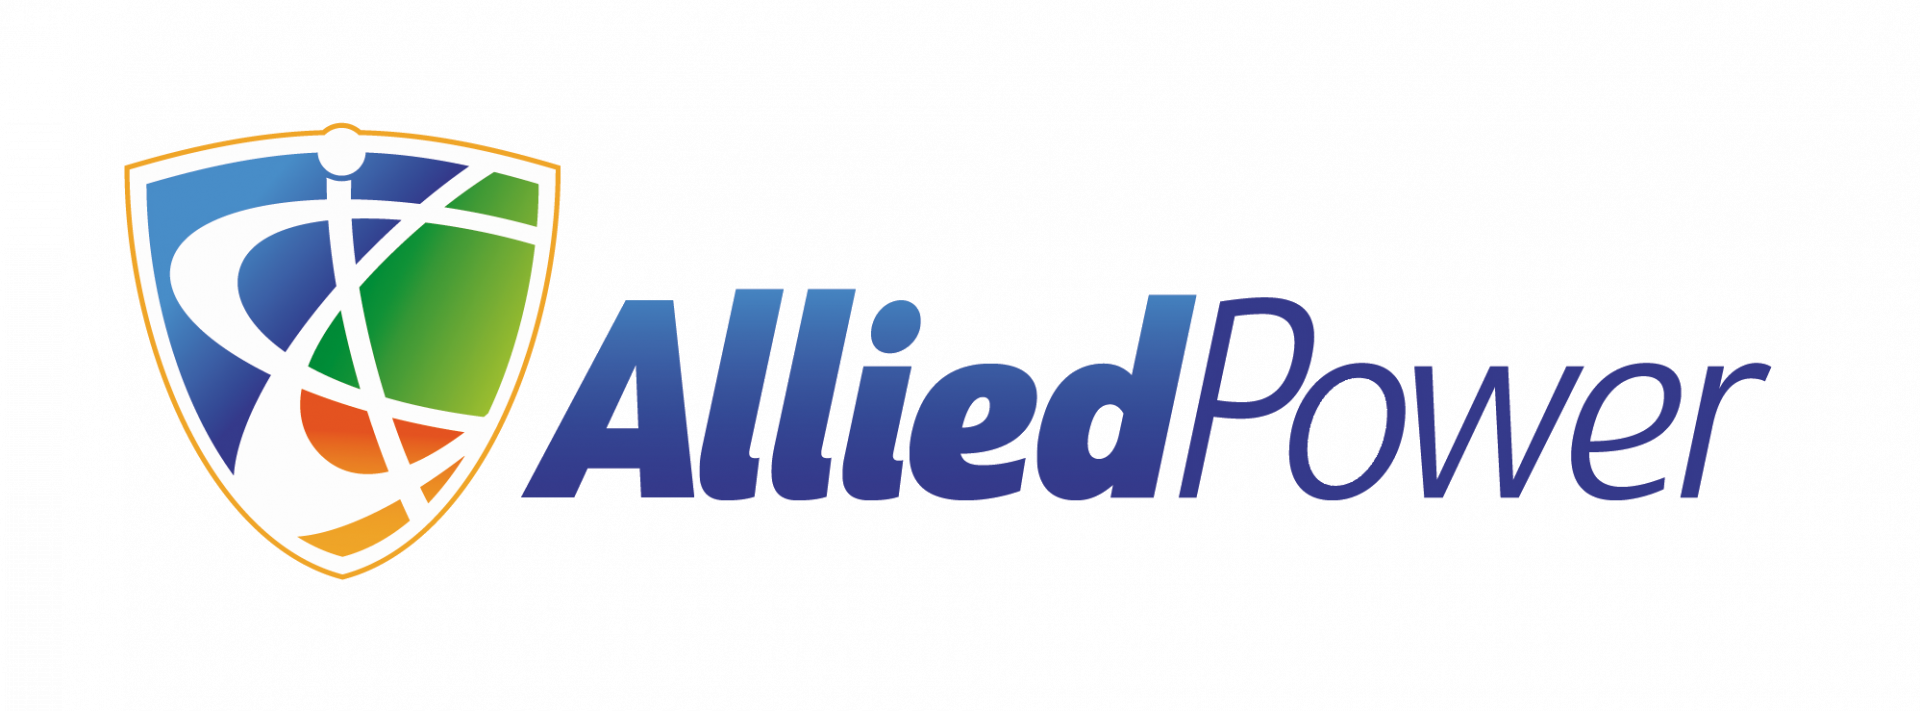 Allied Power logo